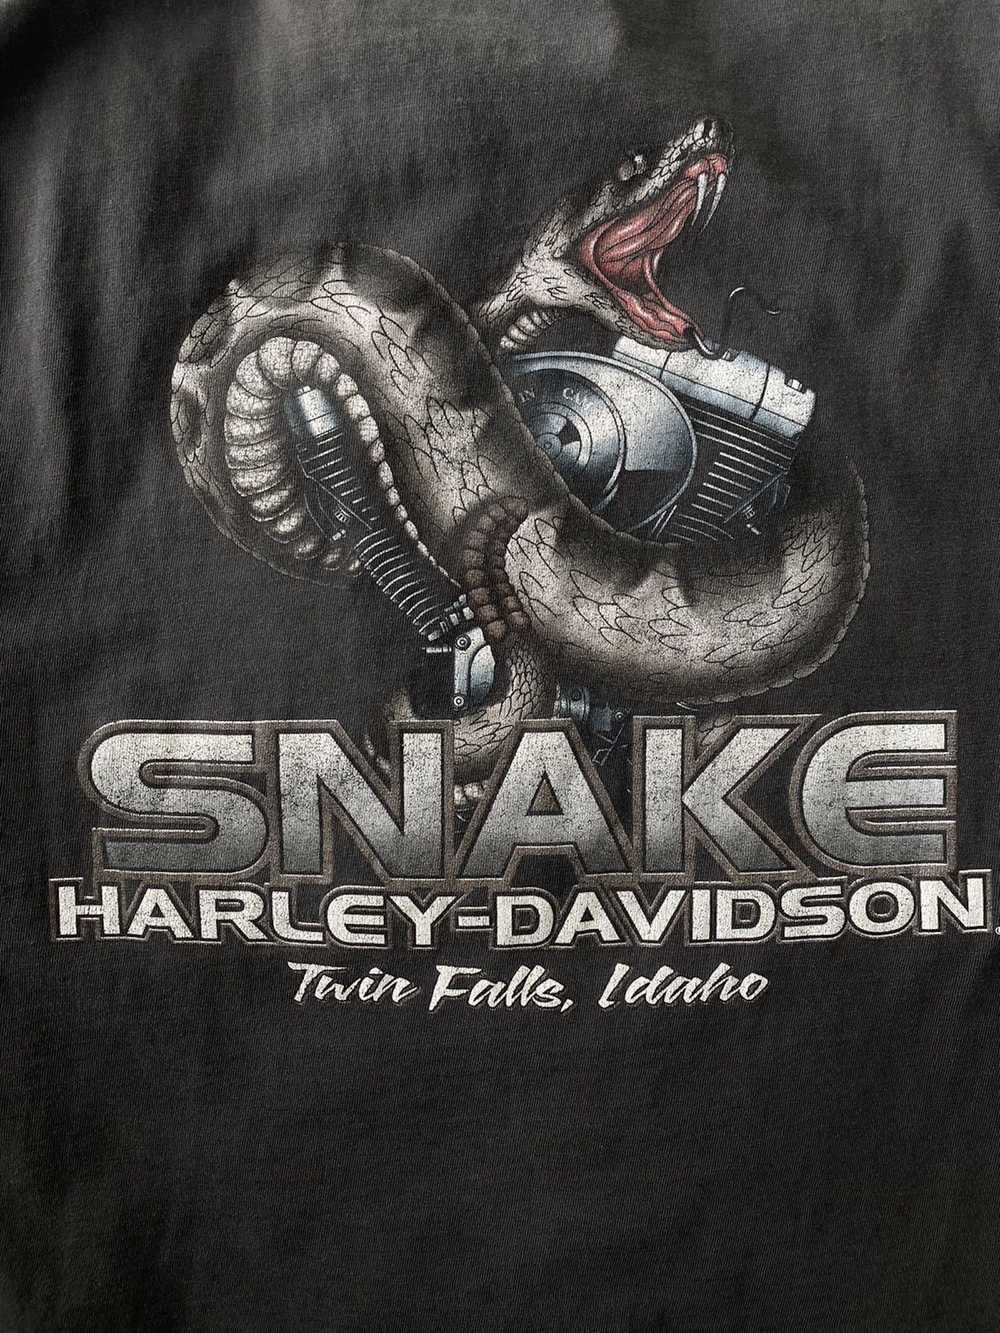 Harley Davidson × Vintage Harley Davidson tshirt - image 3